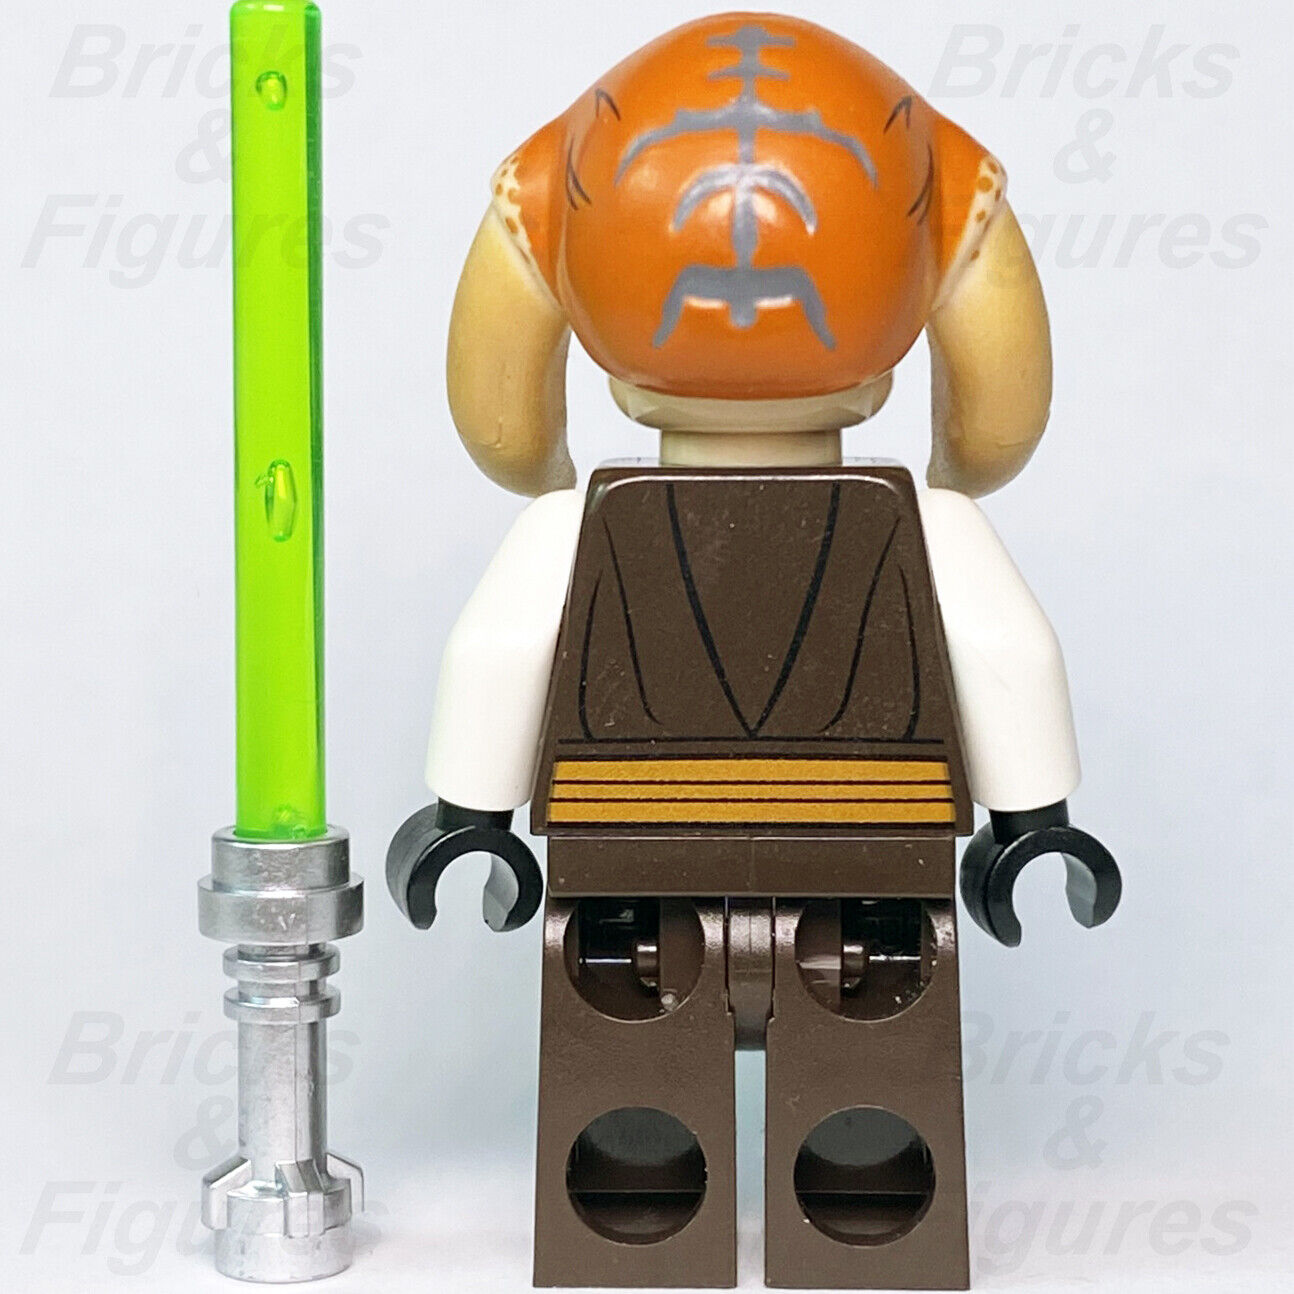 LEGO Star Wars Saesee Tiin Minifigure Jedi Master The Clone Wars 9498 sw0308